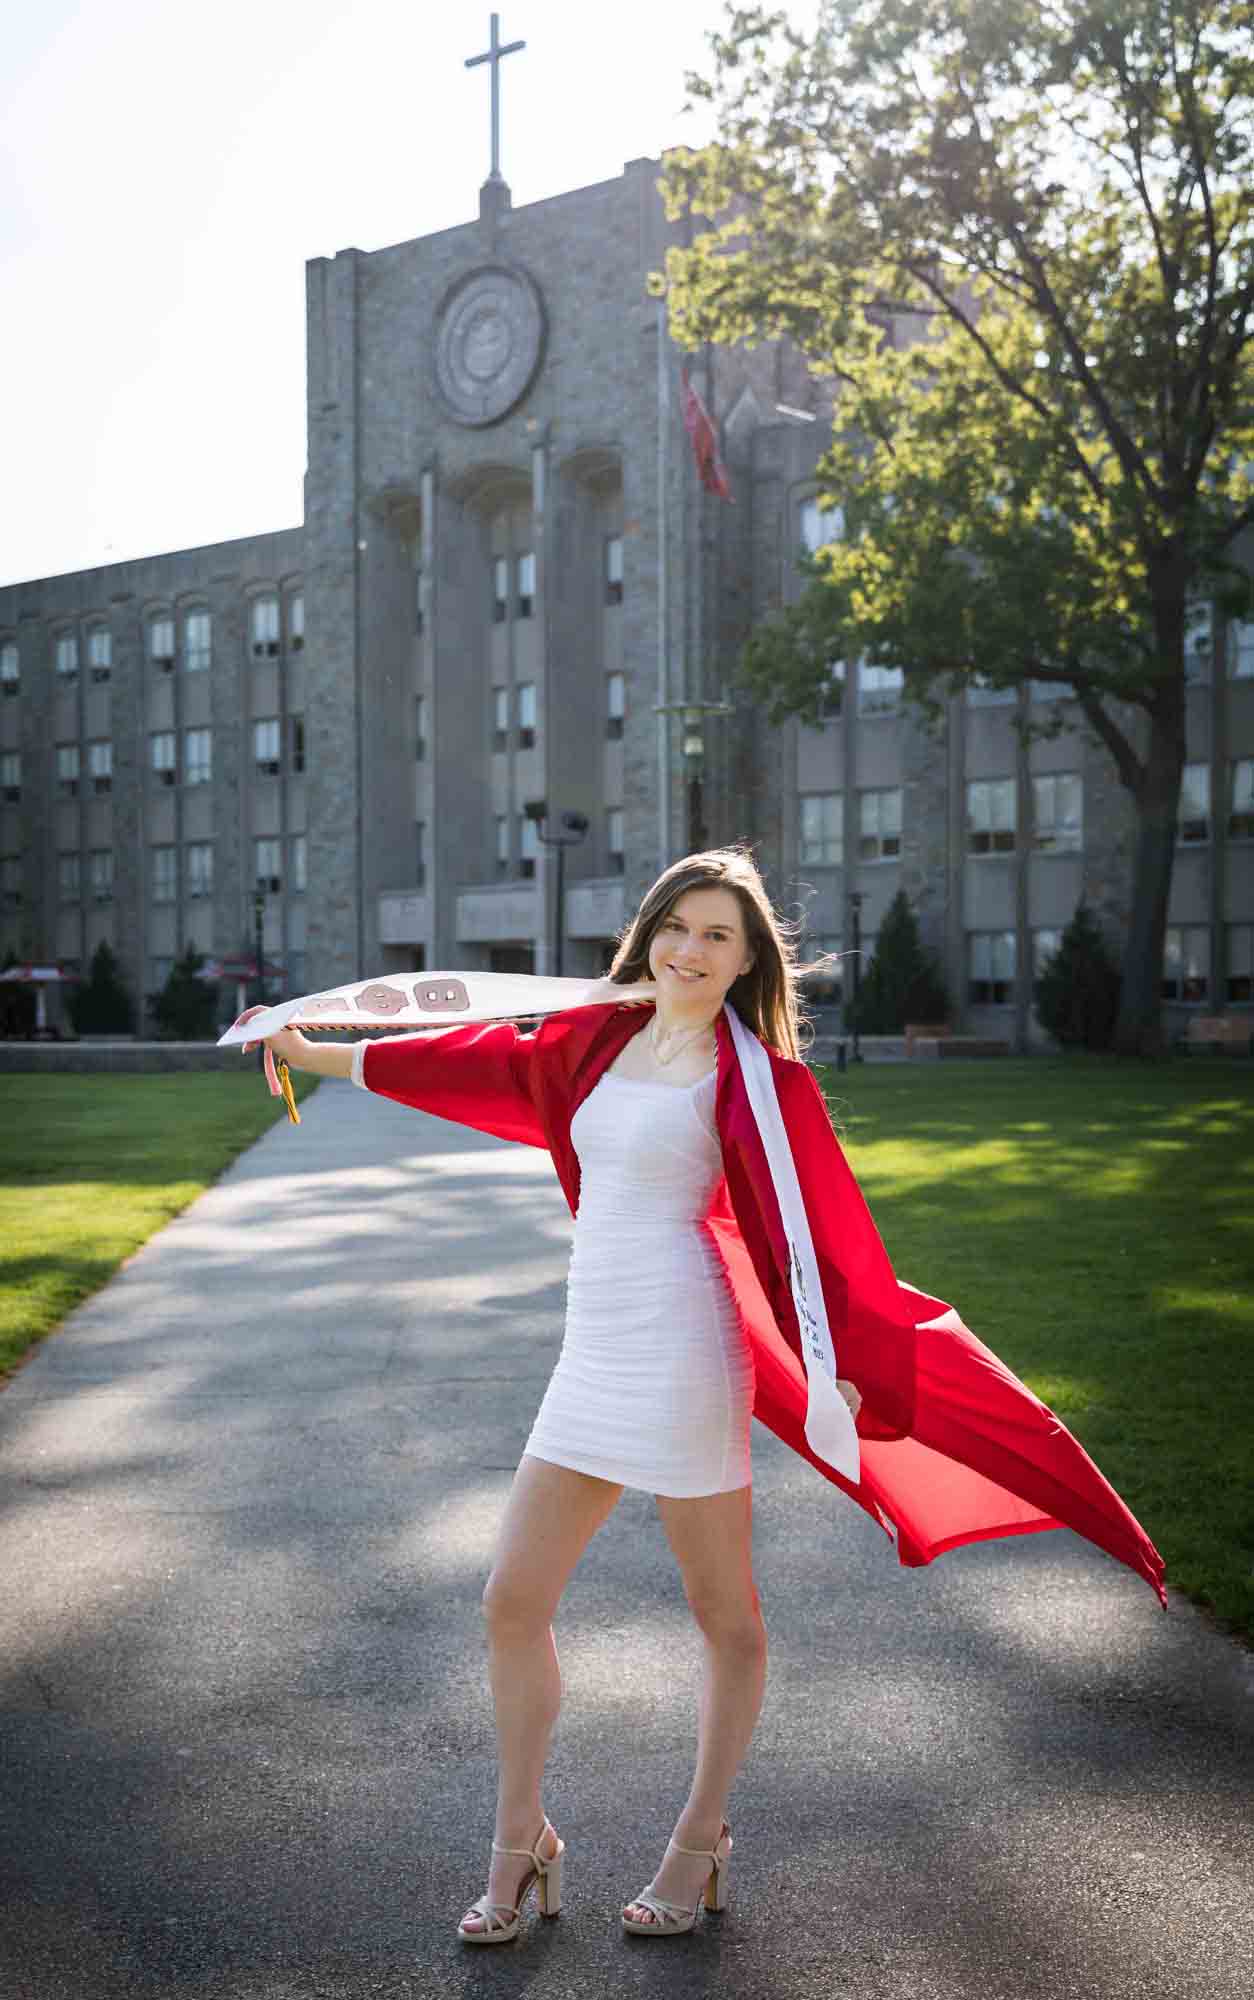 Female graduate wearing red robe and white sash holding white sashes during a St. John’s University graduate portrait session